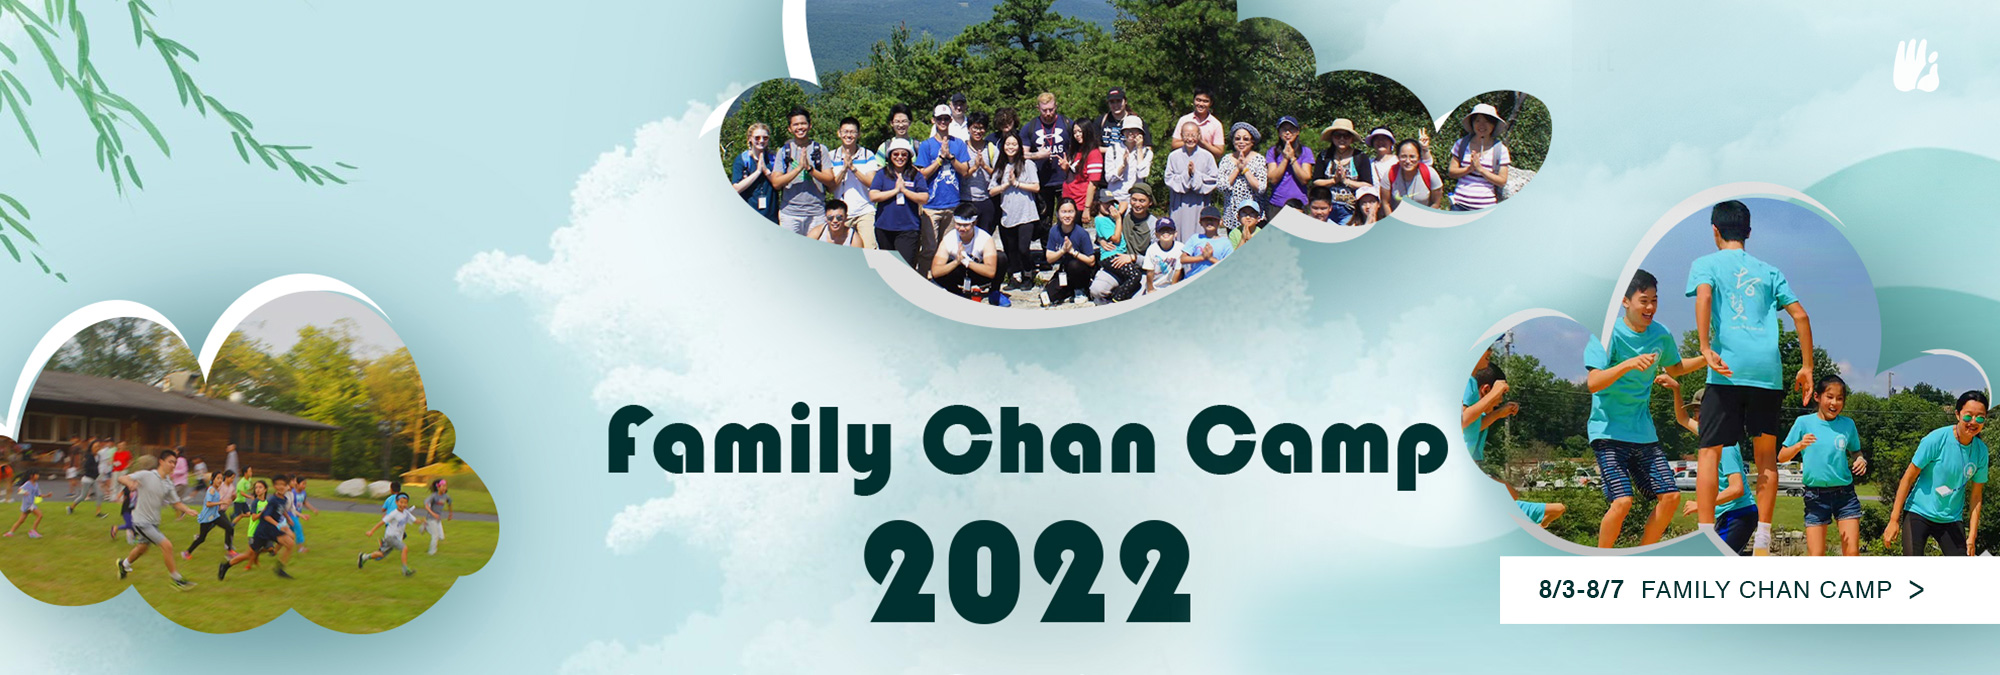 2022 Family Chan Camp 法鼓山親子營